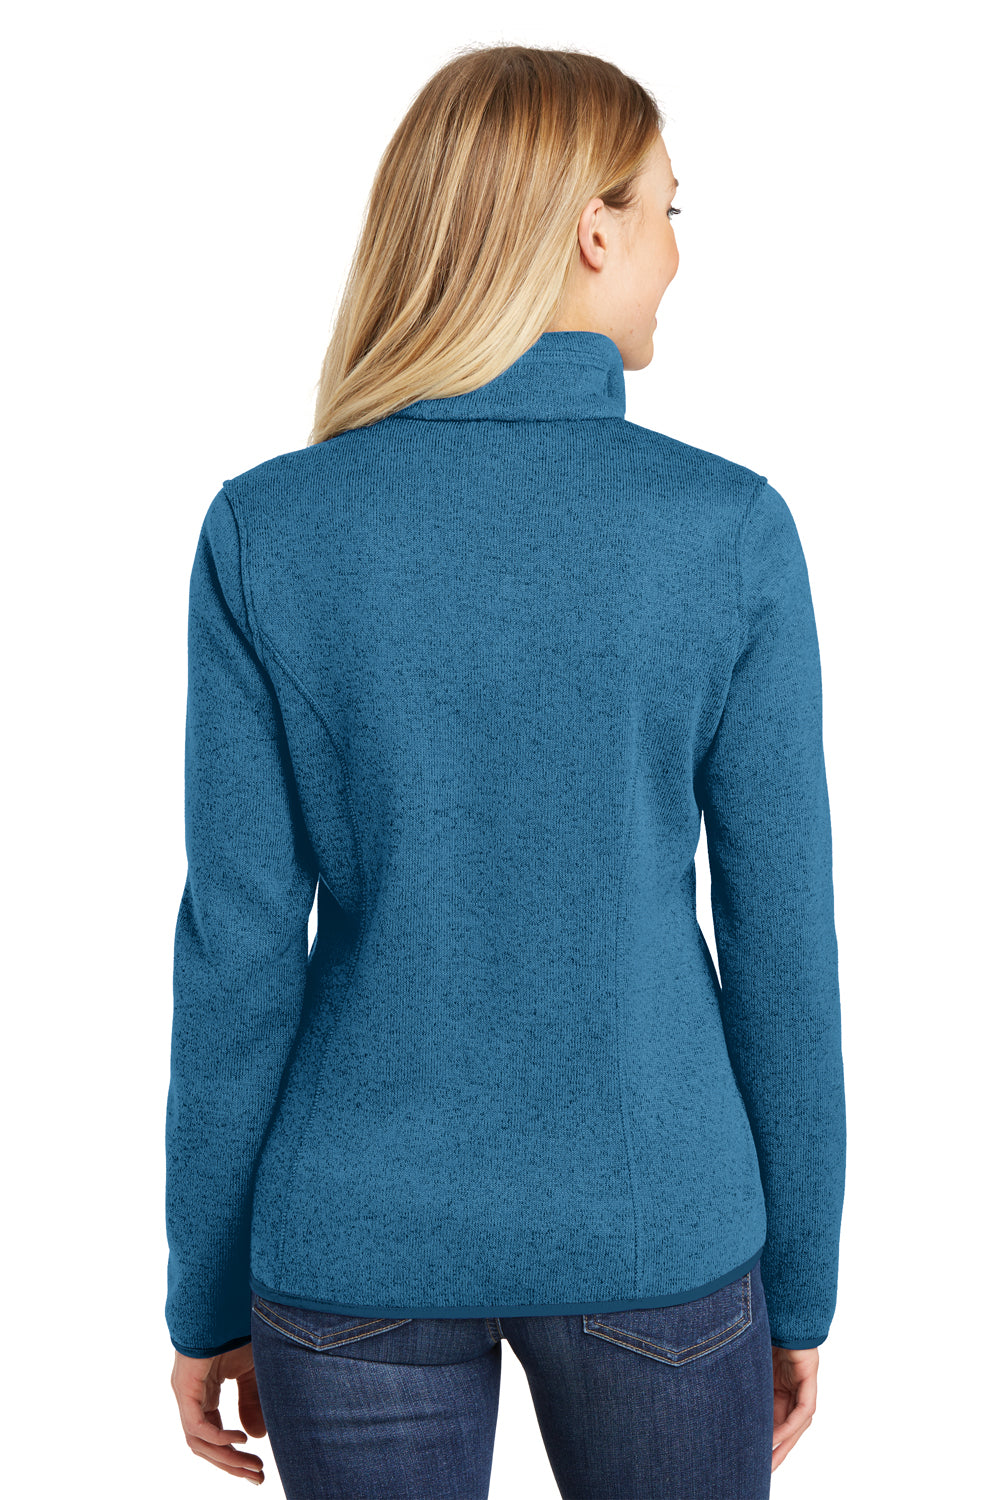 Port Authority L232 Womens Full Zip Sweater Fleece Jacket Heather Medium Blue Back